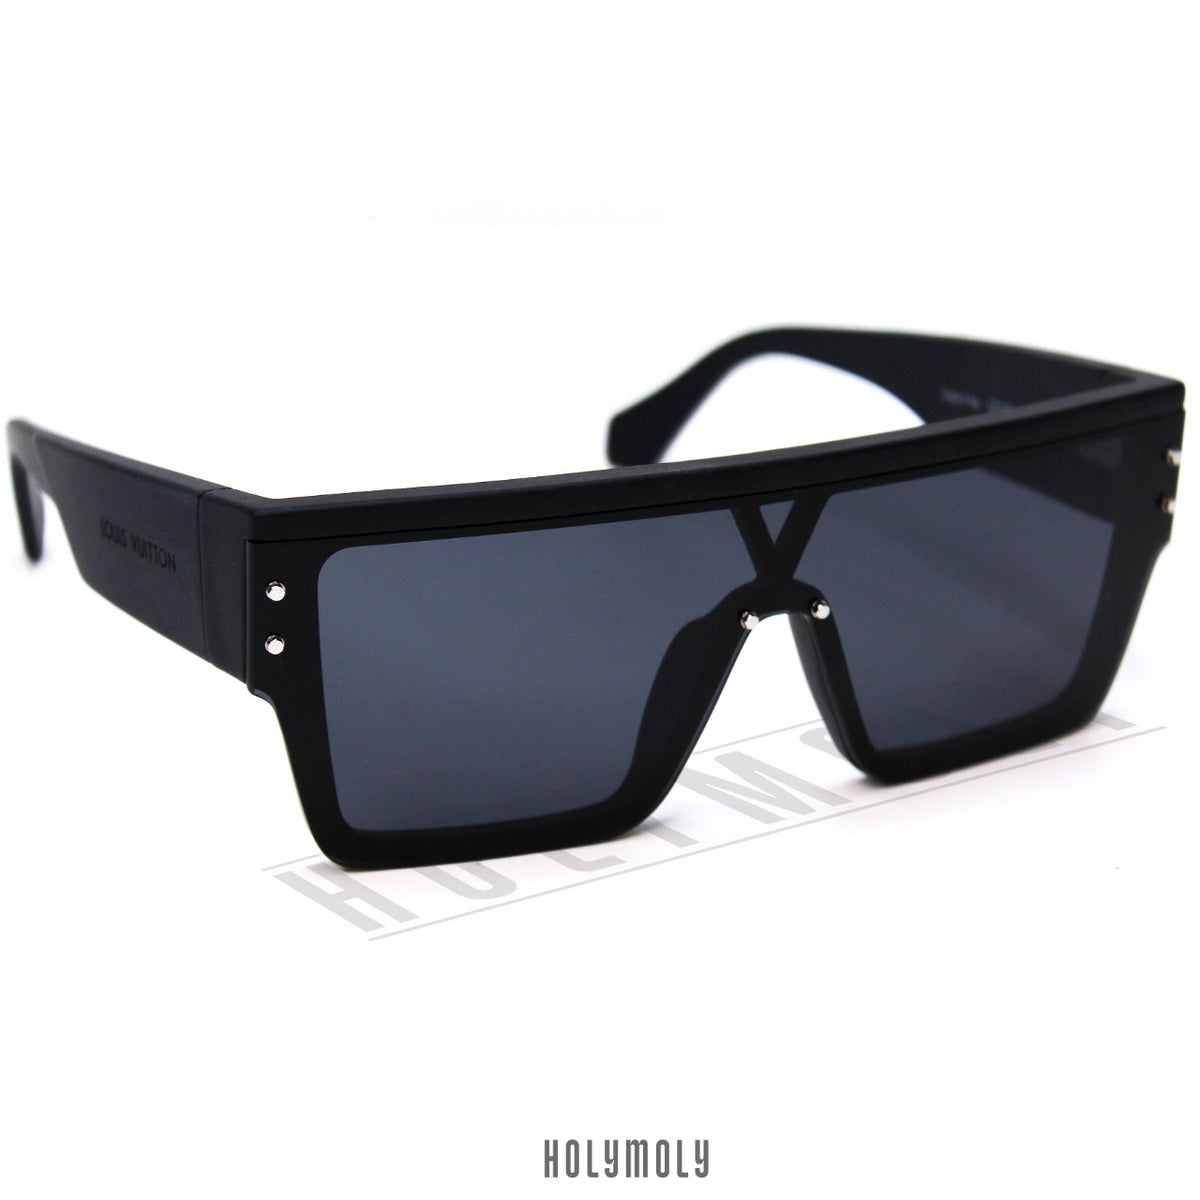 Shop Louis Vuitton MONOGRAM Lv waimea l sunglasses (Z1583E) by CATSUSELECT